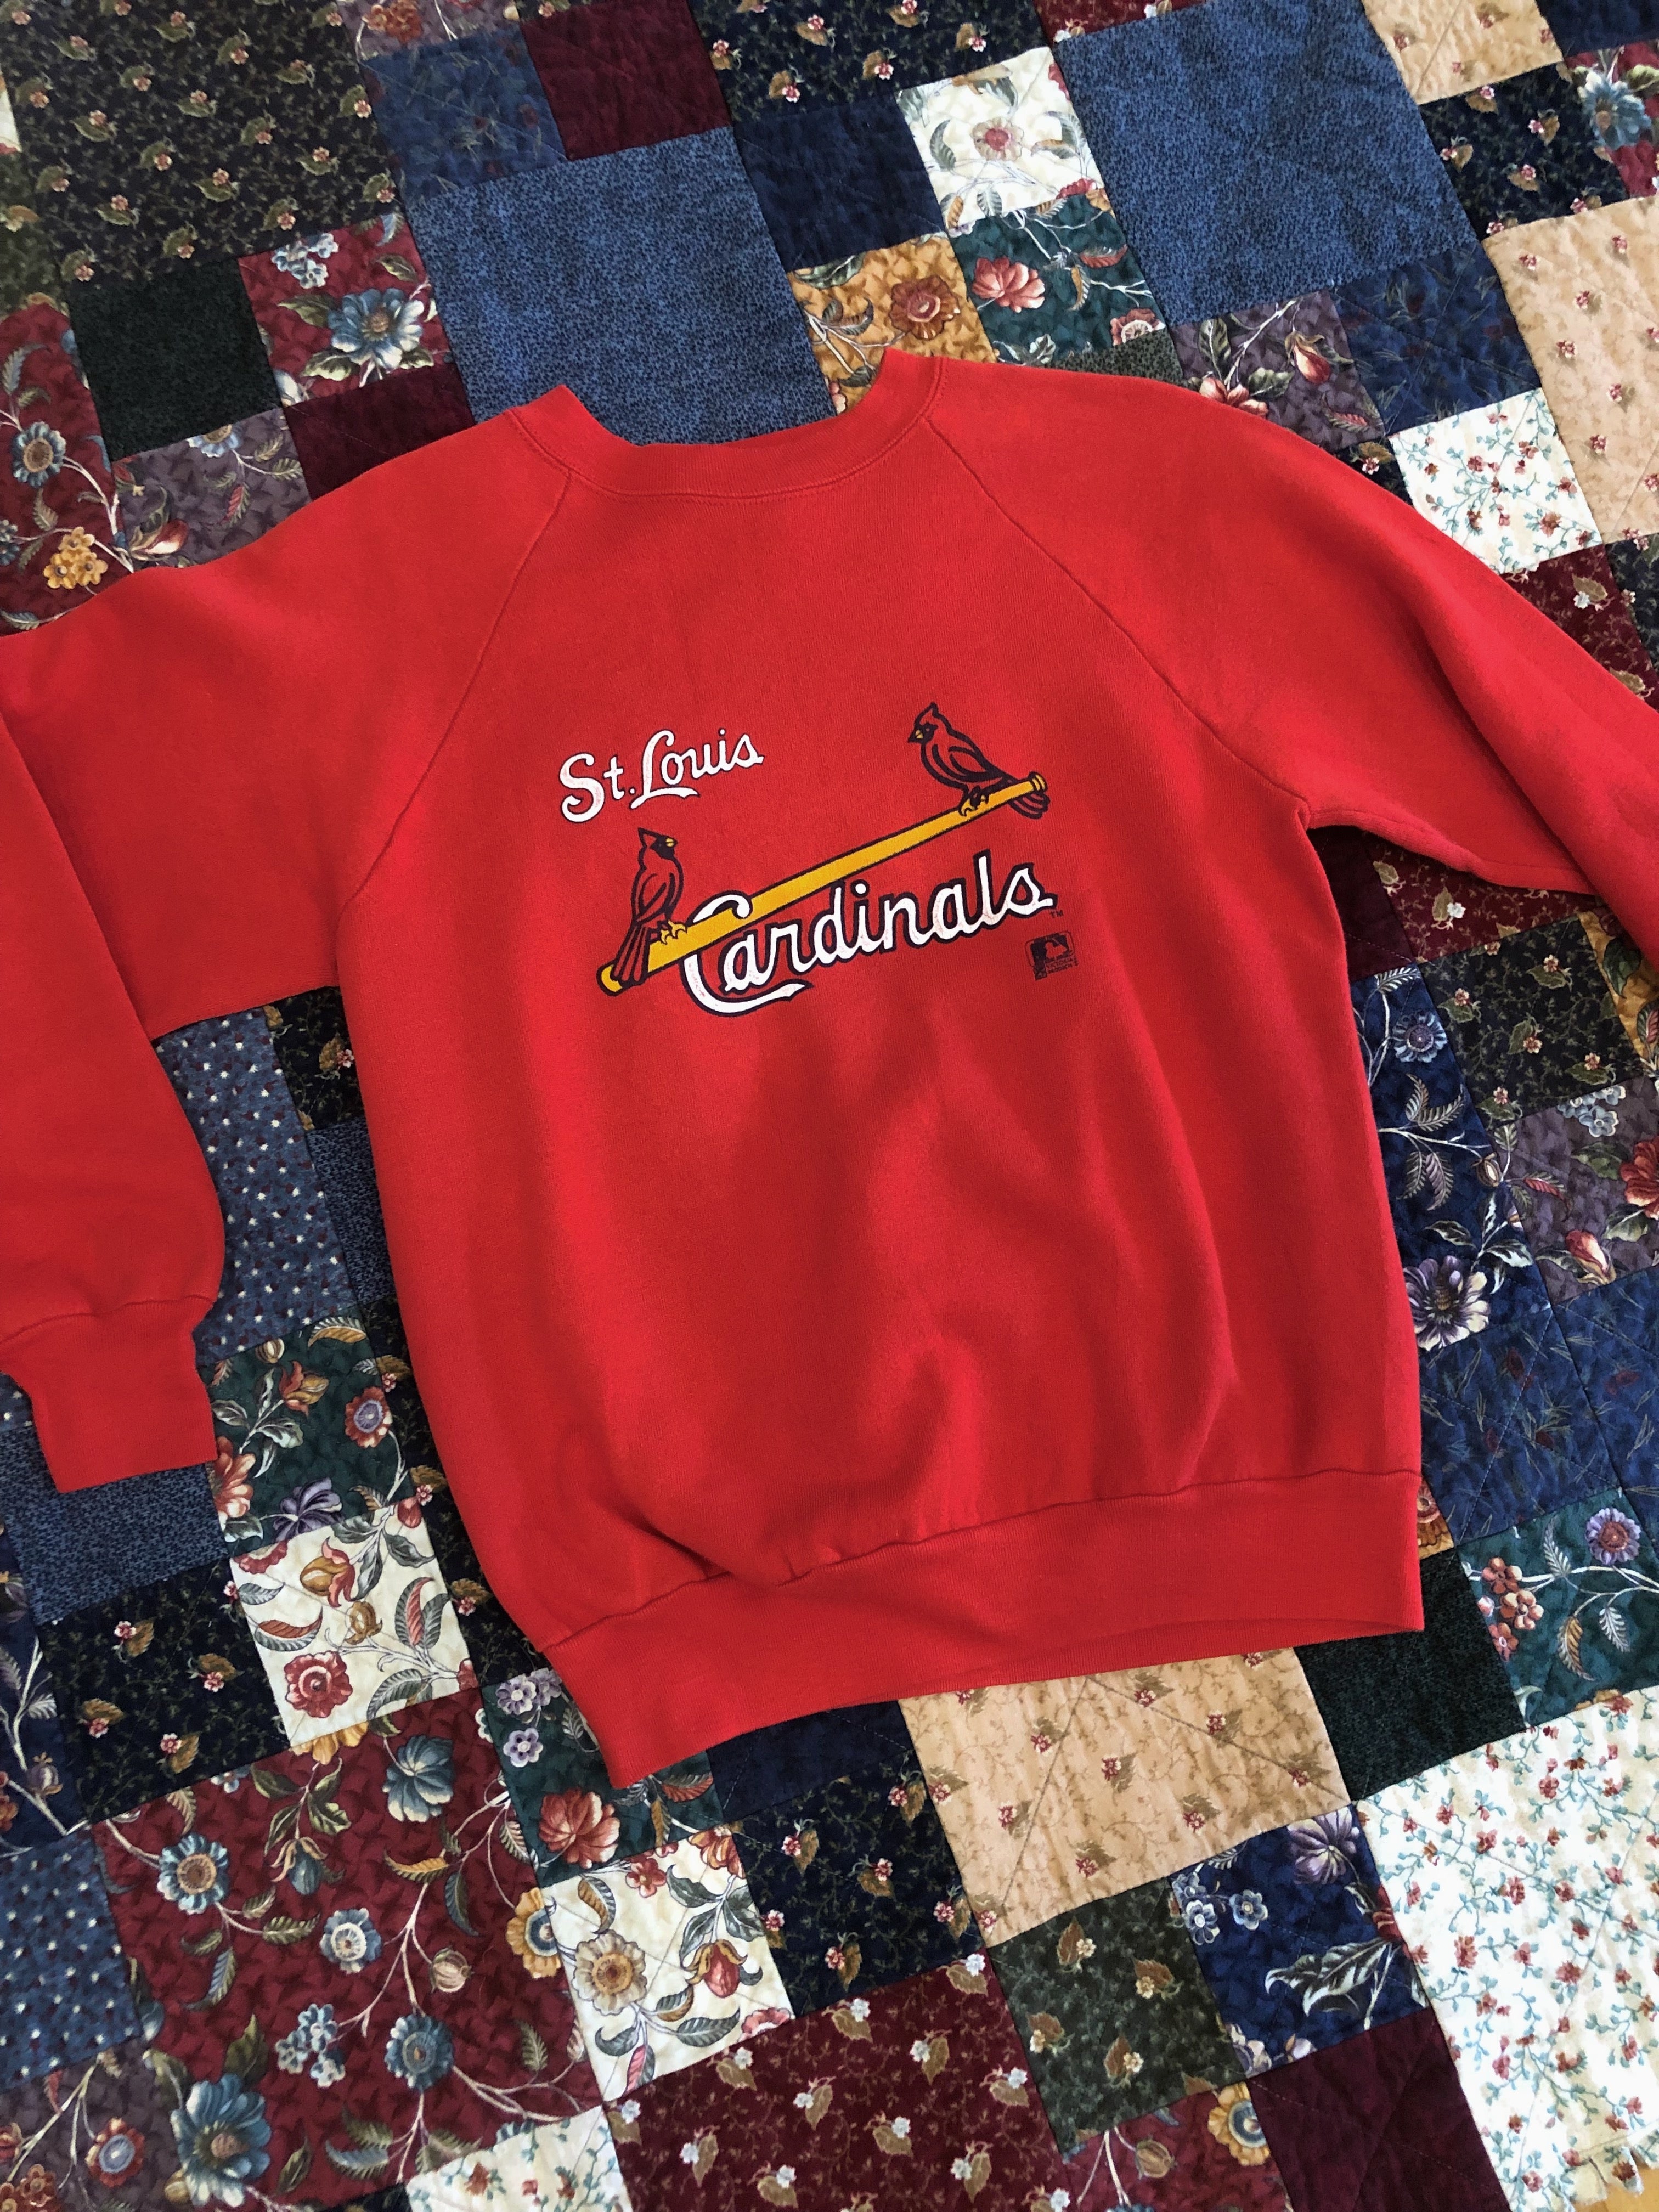 St Louis Cardinals Vintage Sweatshirt